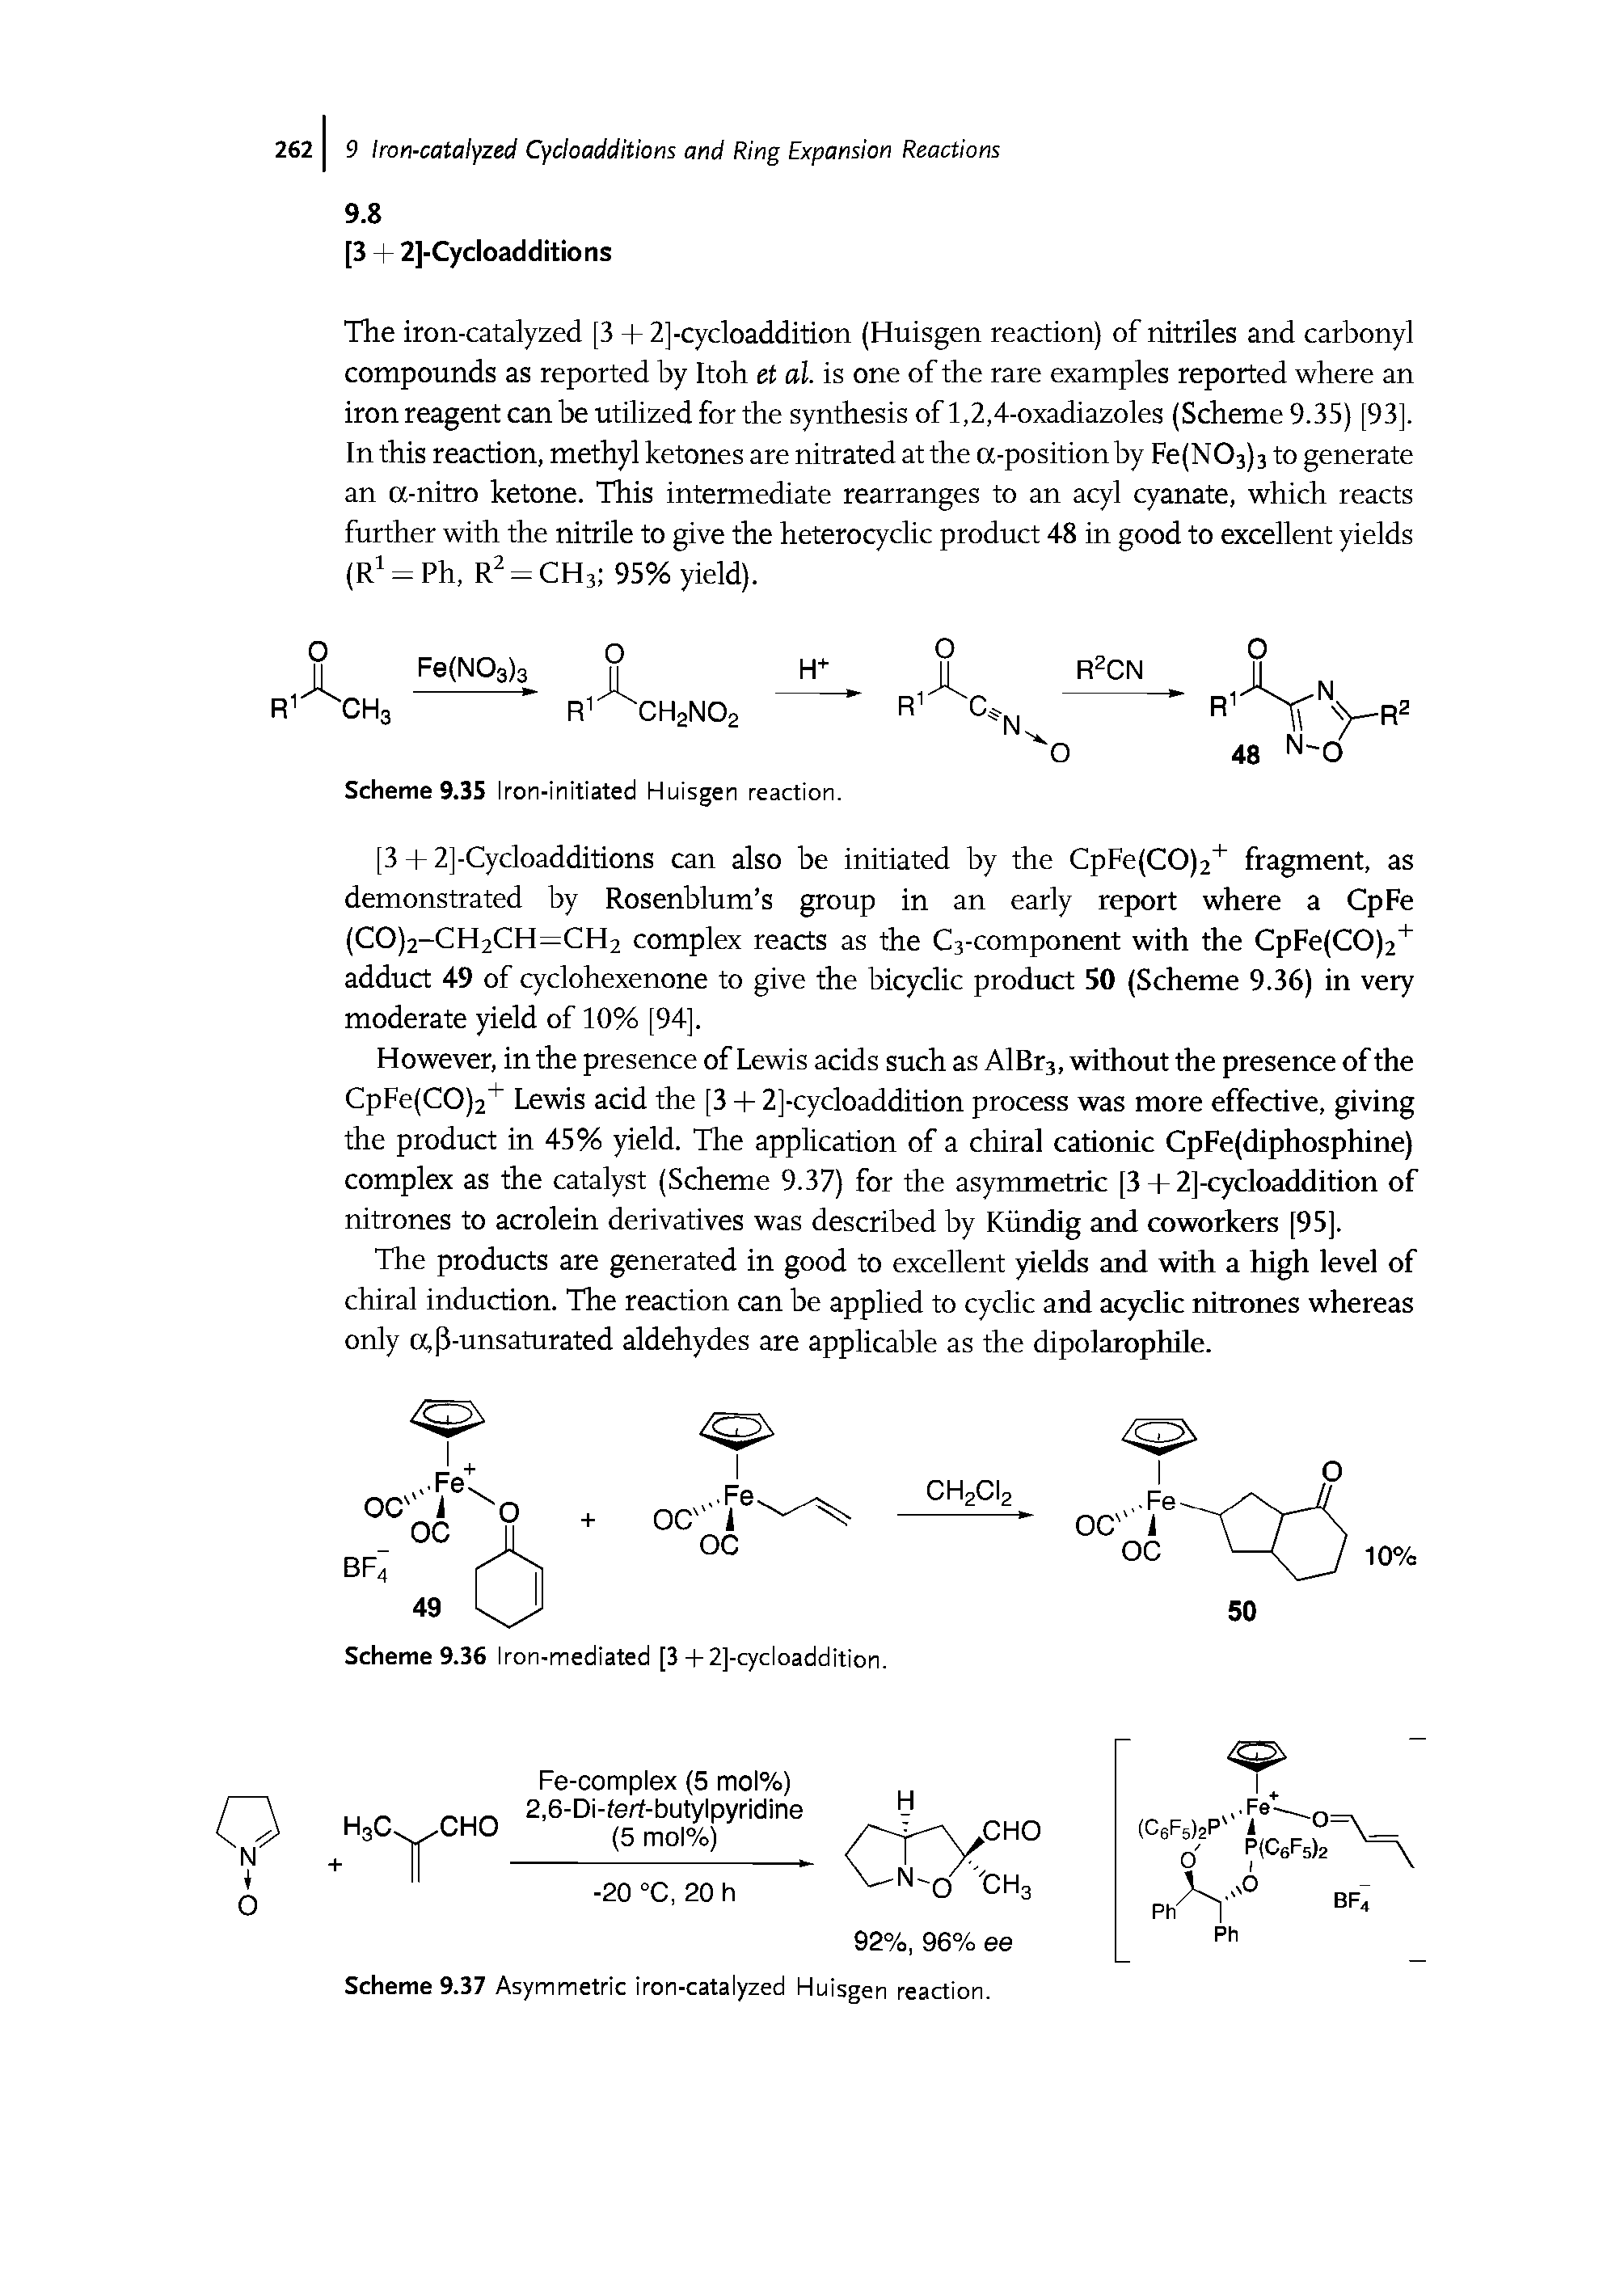 Scheme 9.37 Asymmetric iron-catalyzed Huisgen reaction.